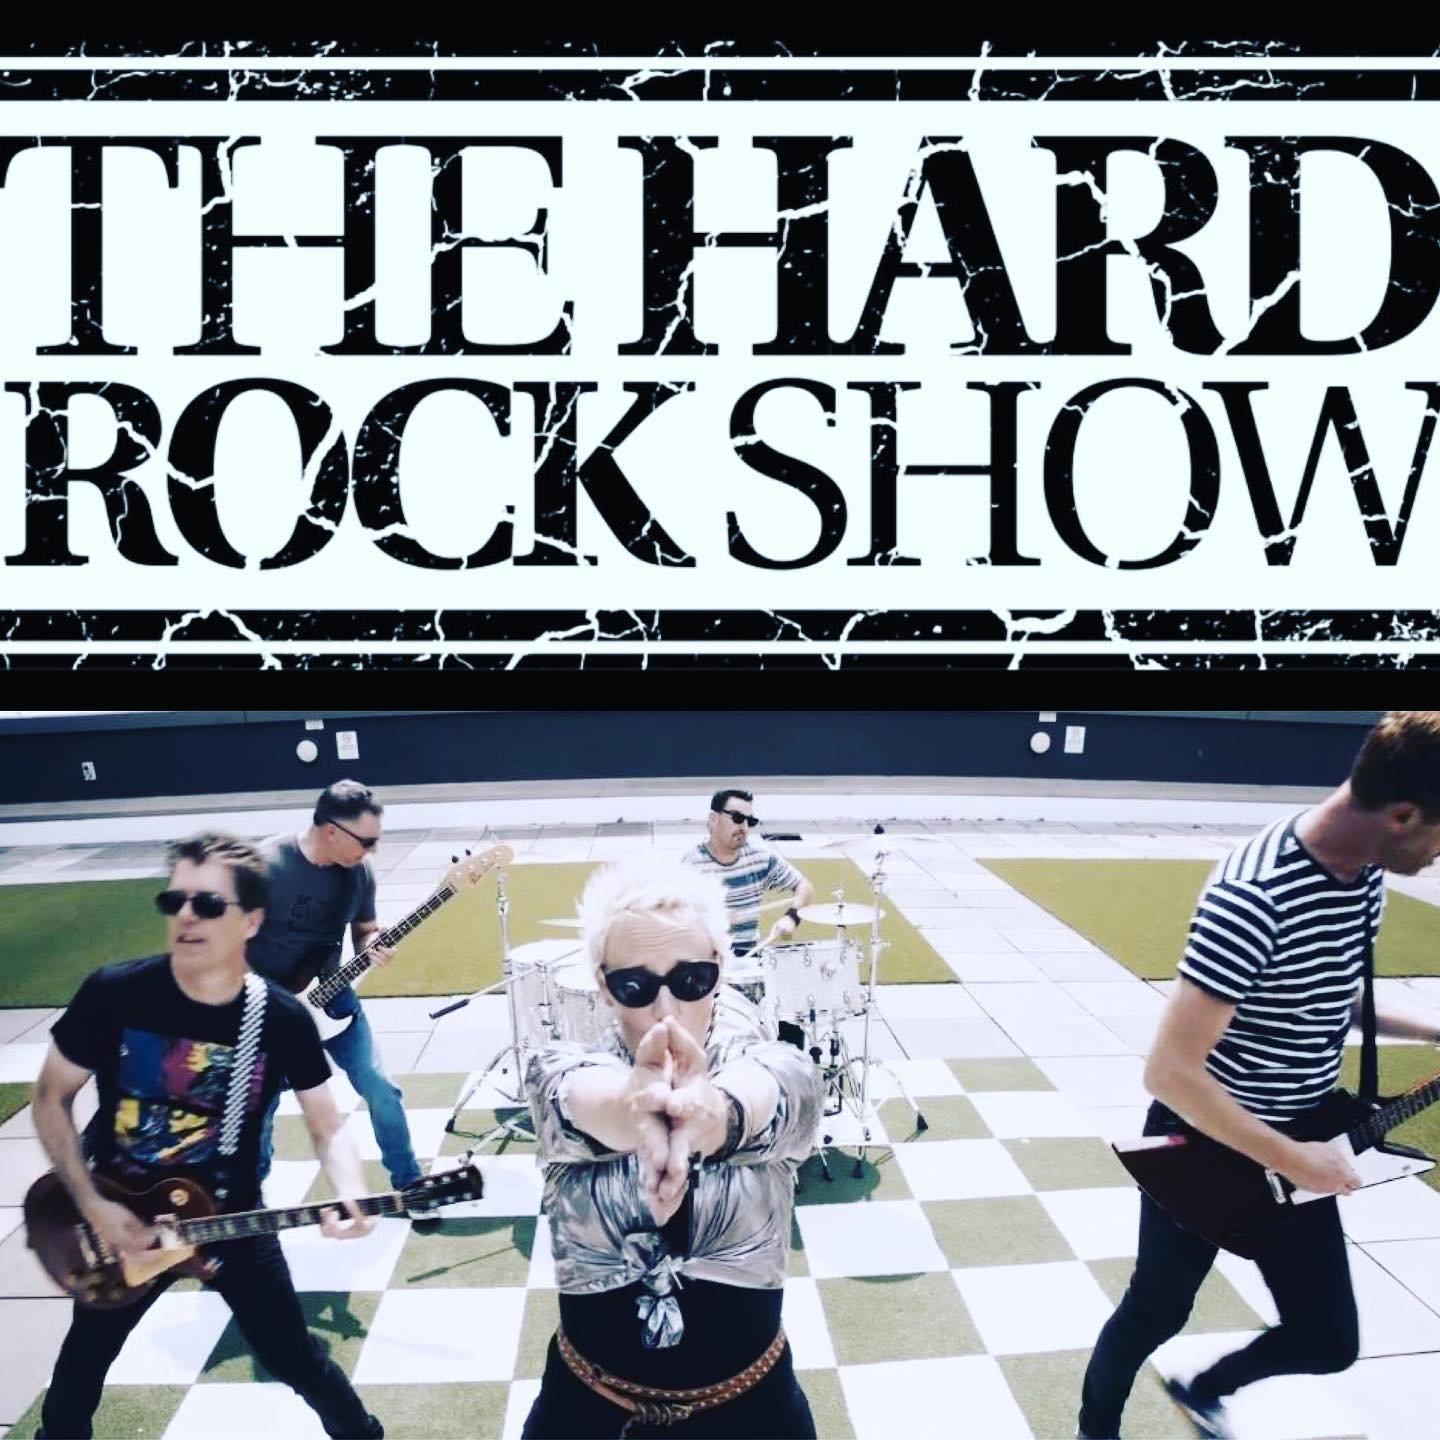 RR Hard Rock Show.jpg